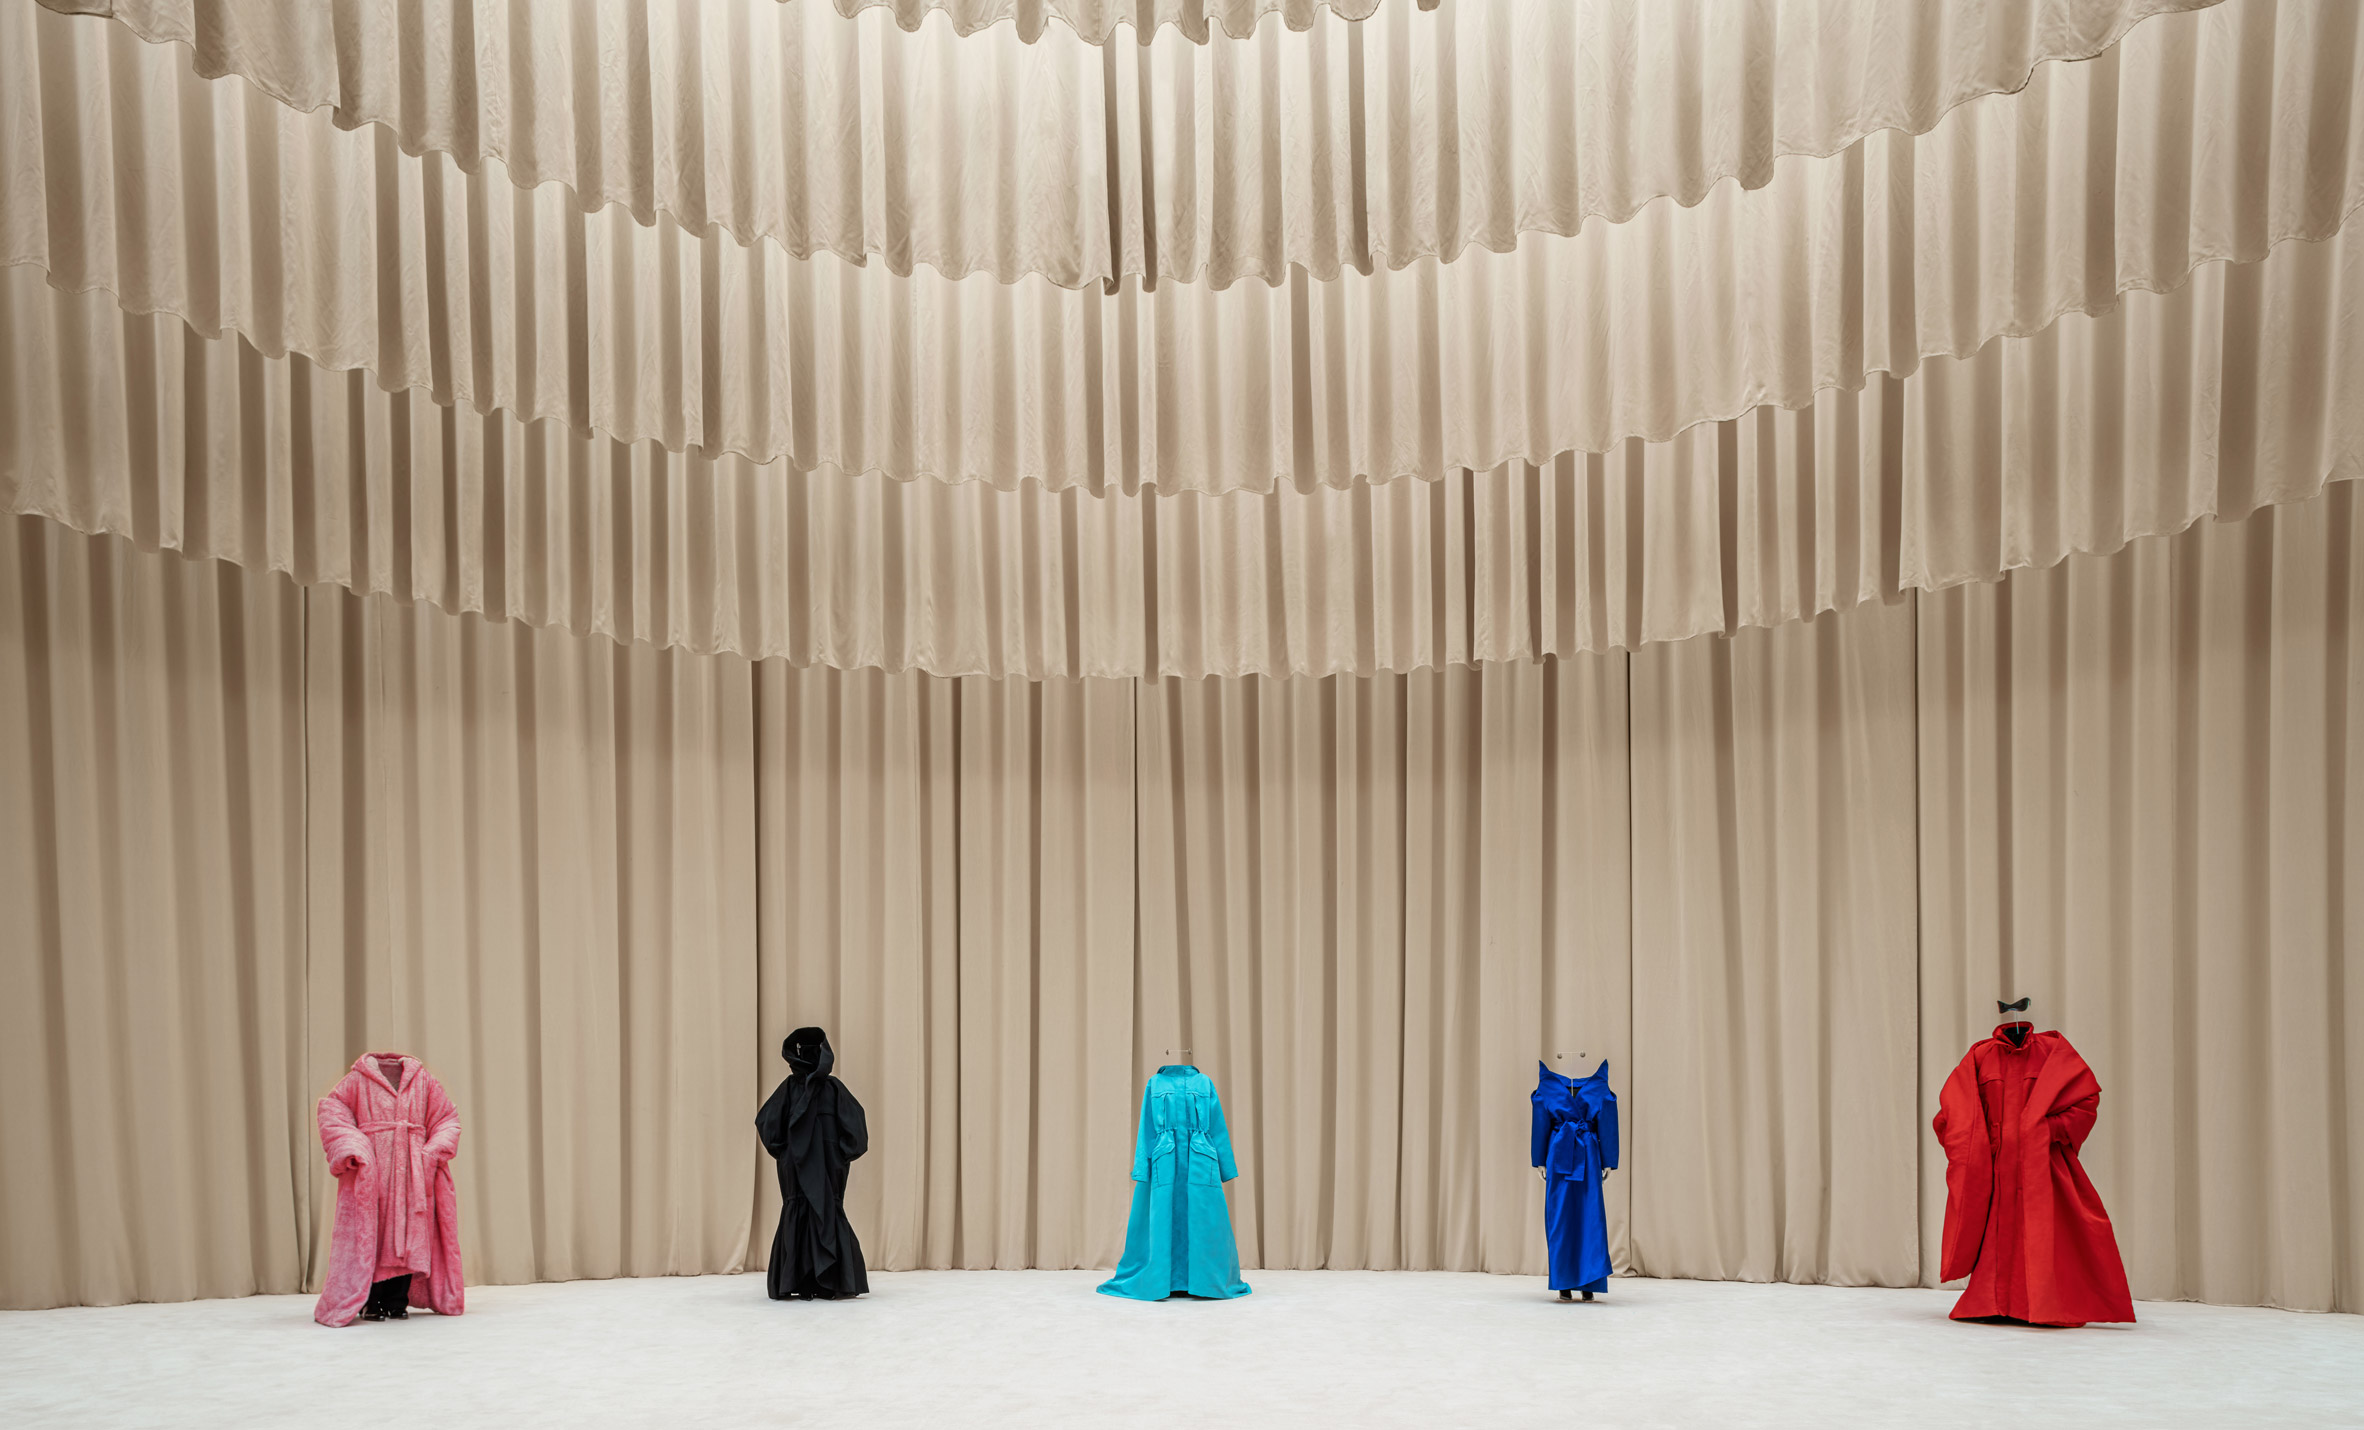 Repræsentere I mængde Colonial Balenciaga transforms former fuel tanks into couture salon in Shanghai